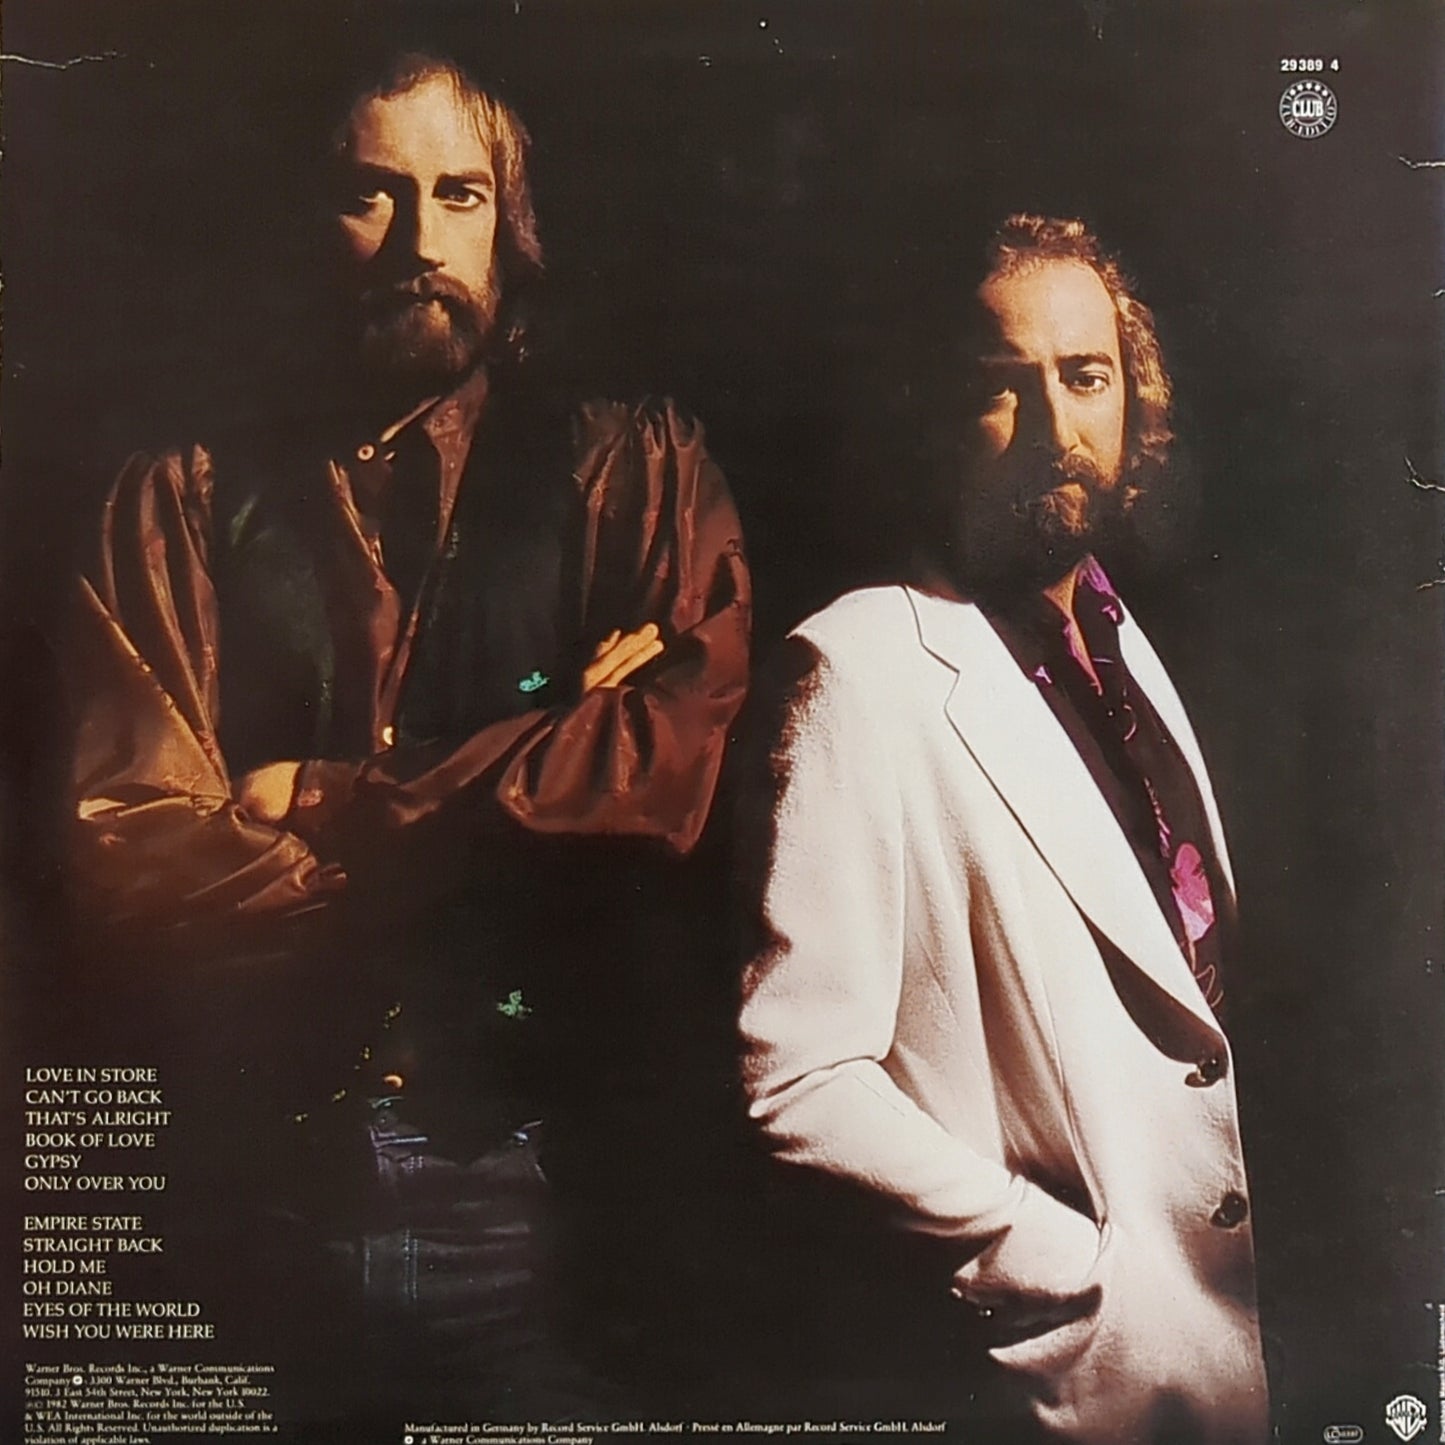 Fleetwood Mac – Mirage